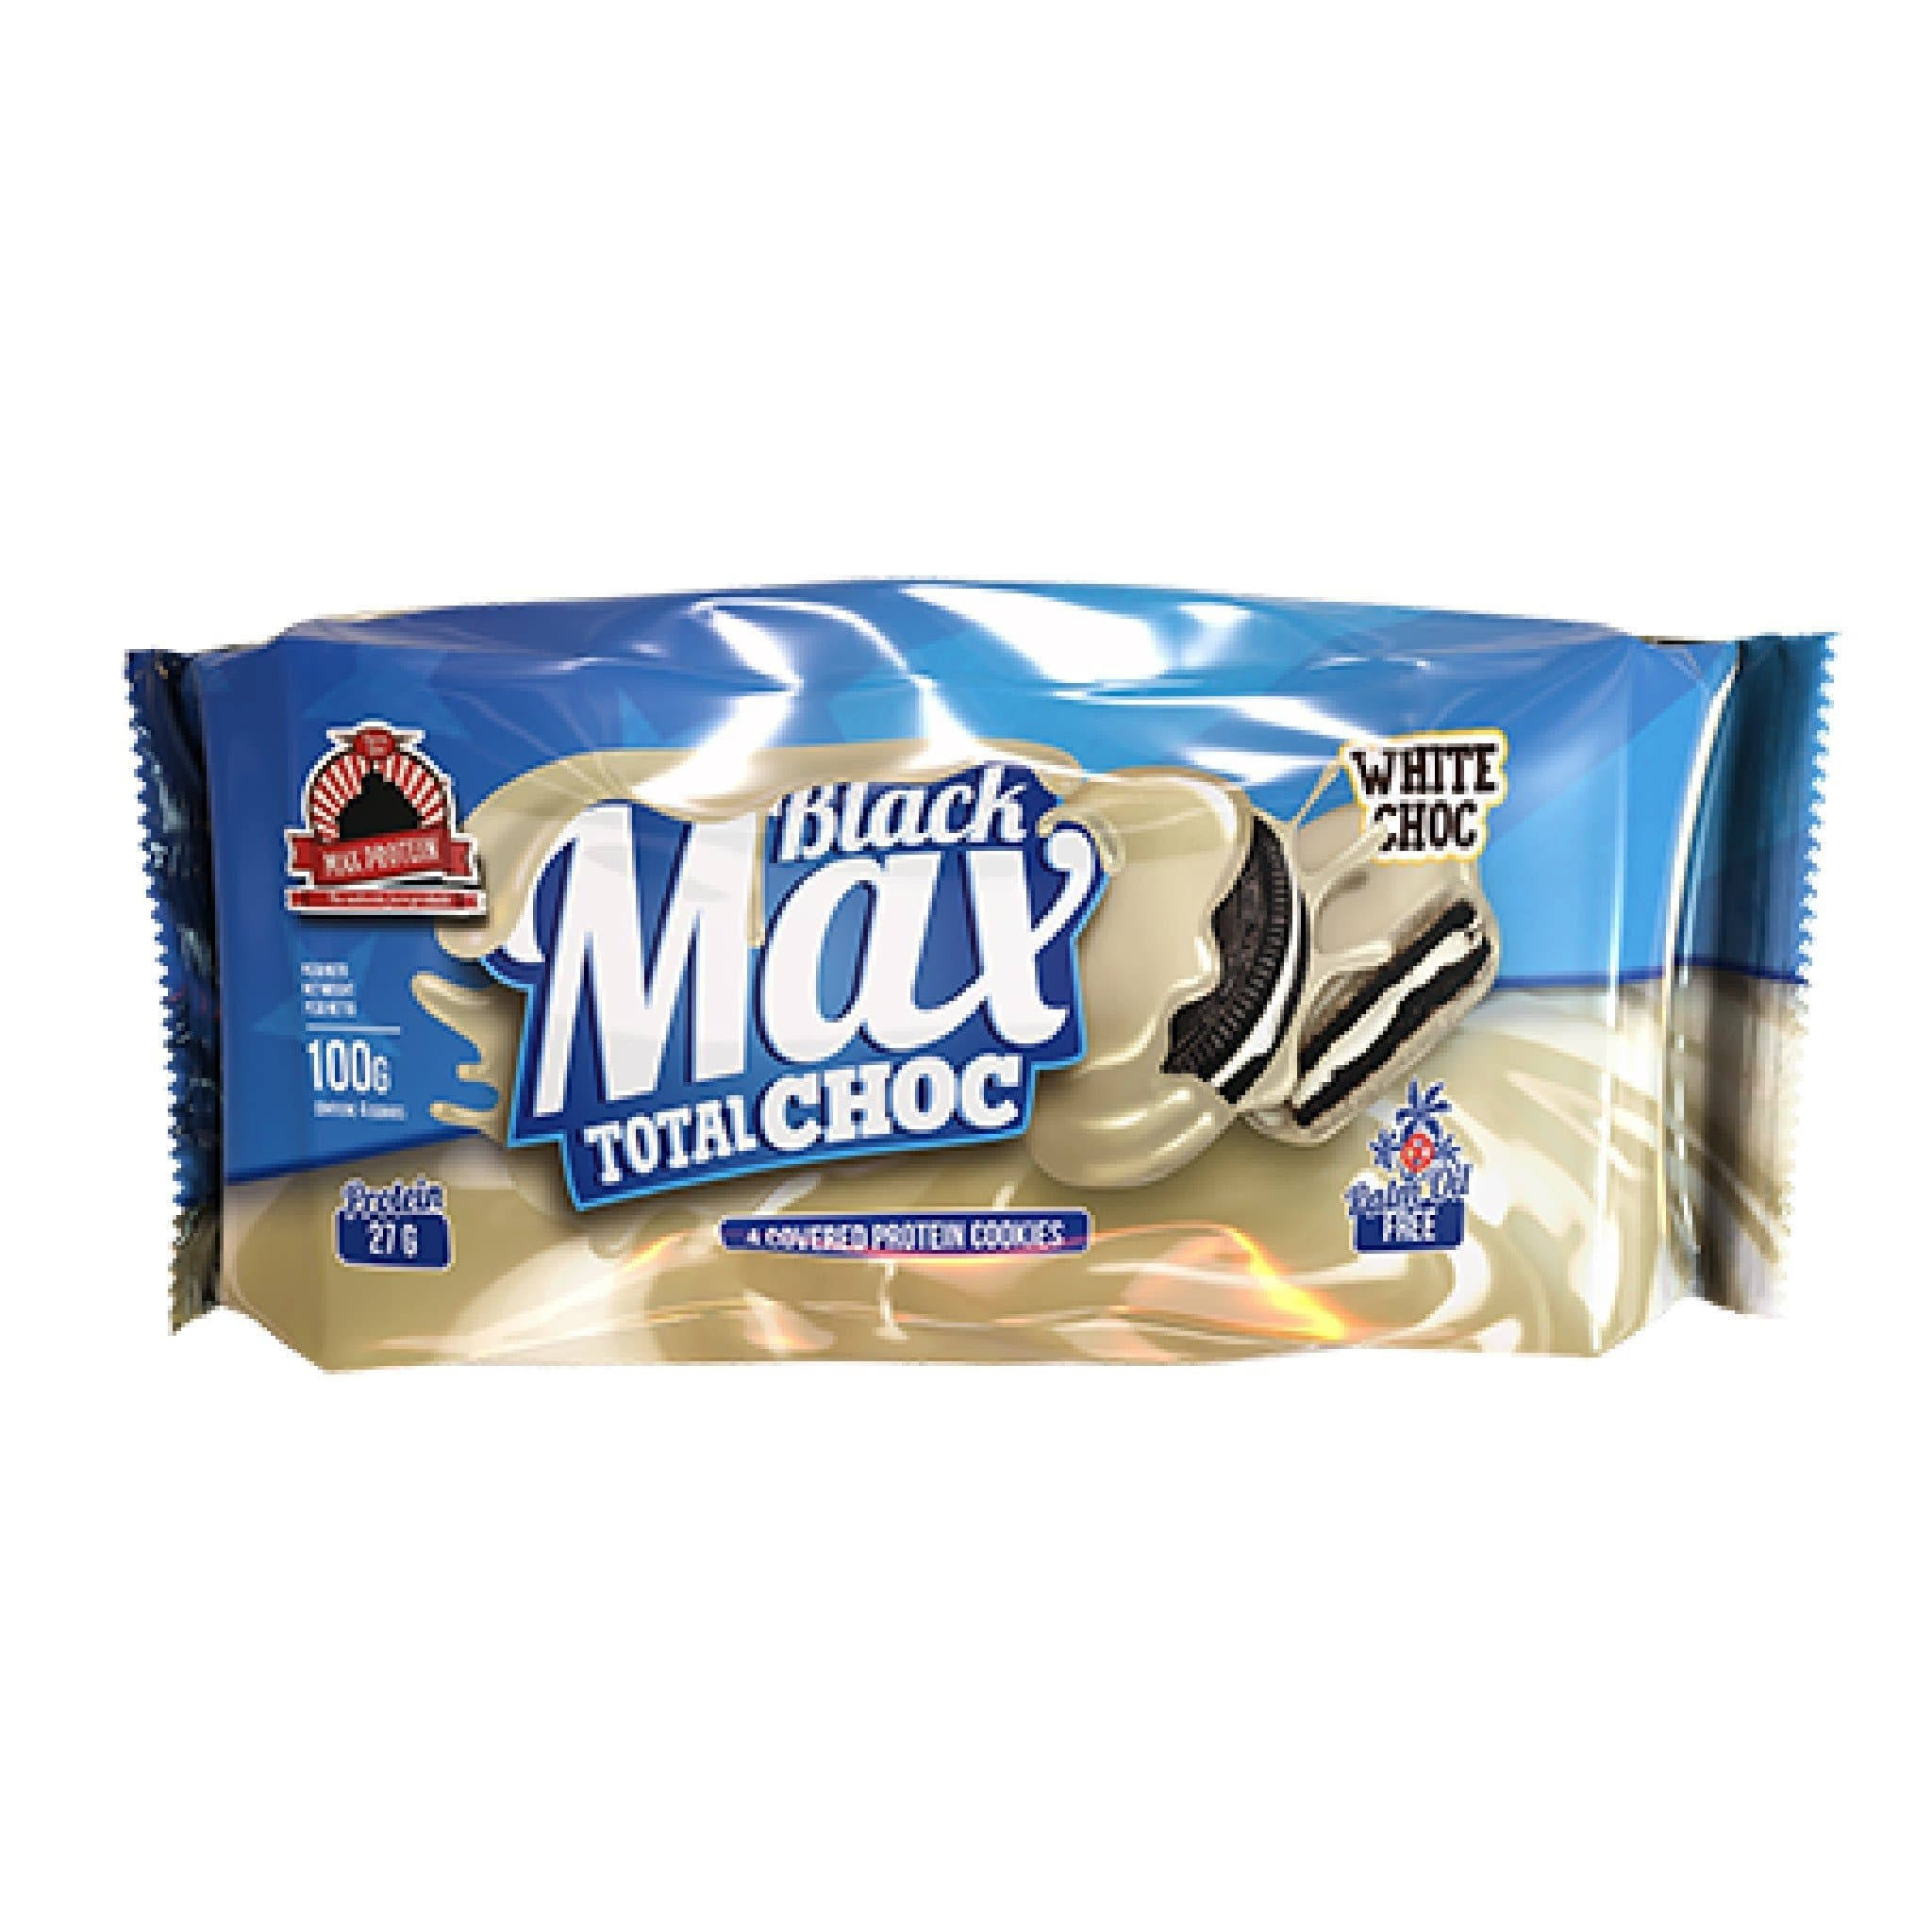 Max Black Total Choc Protein Cookies - 100g